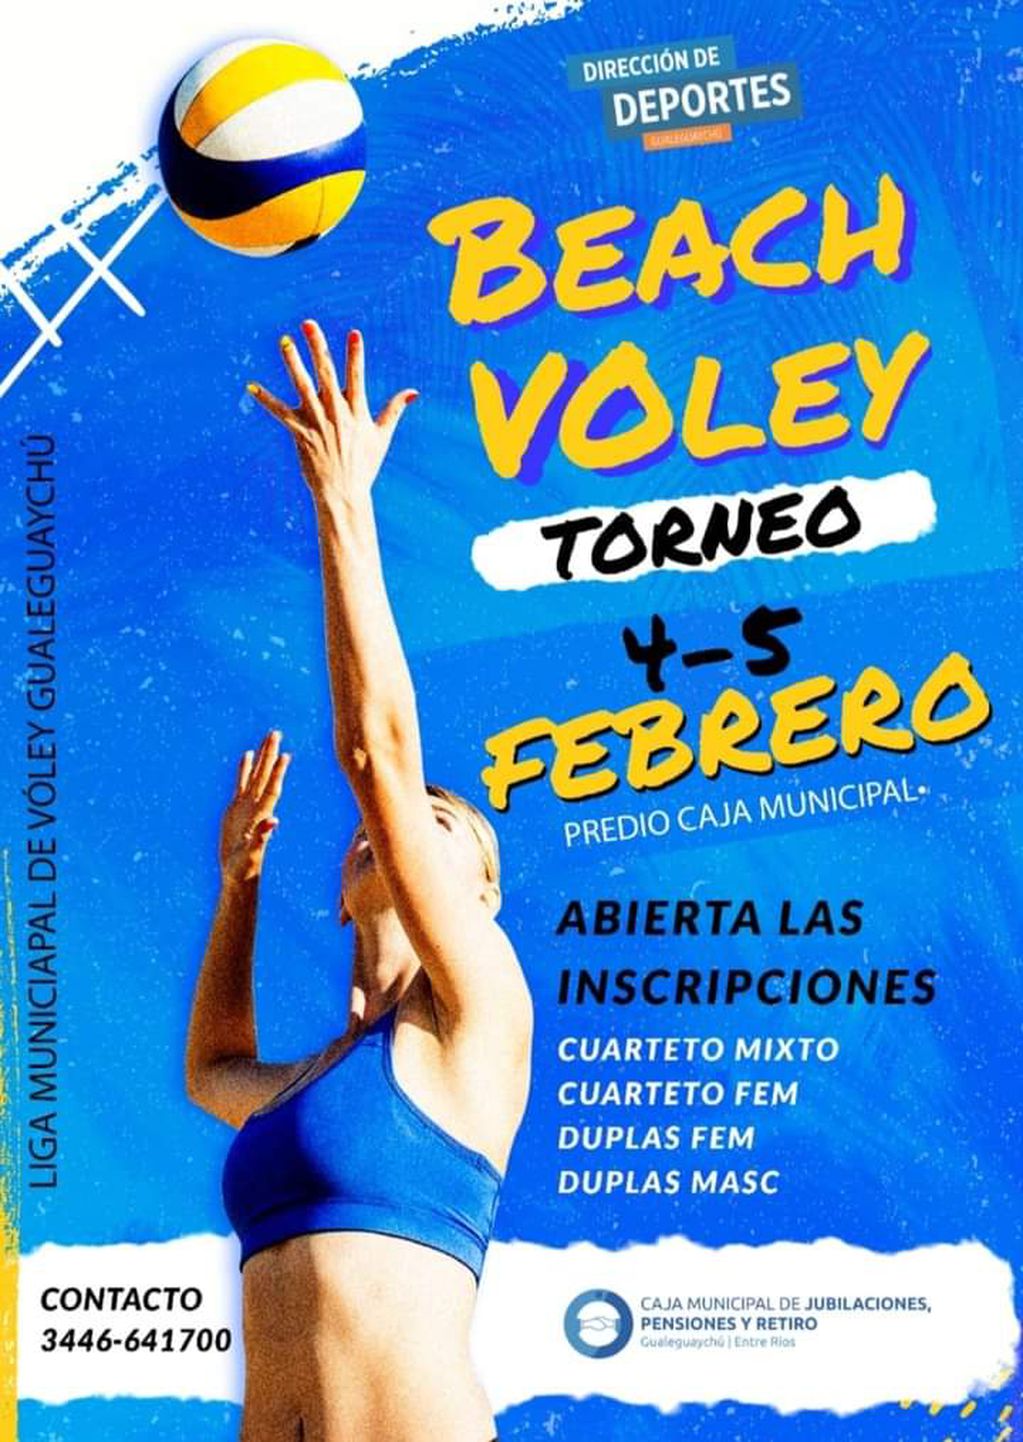 Torneo Beach Voley Gualeguaychú